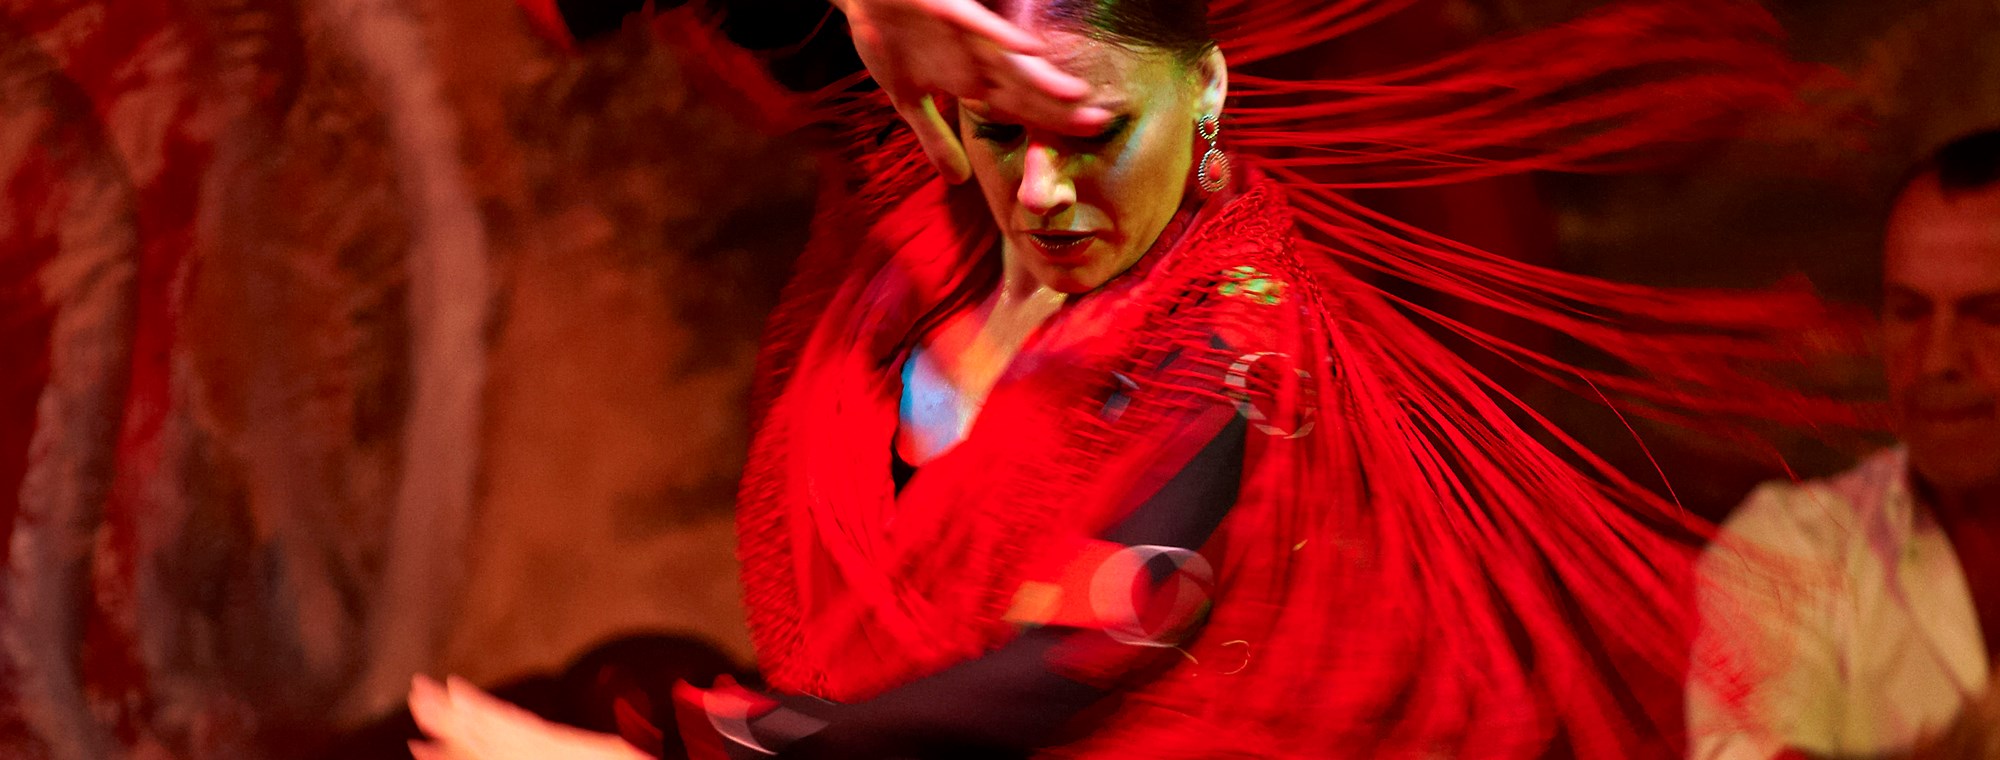 Spain tours with Flamenco dancer